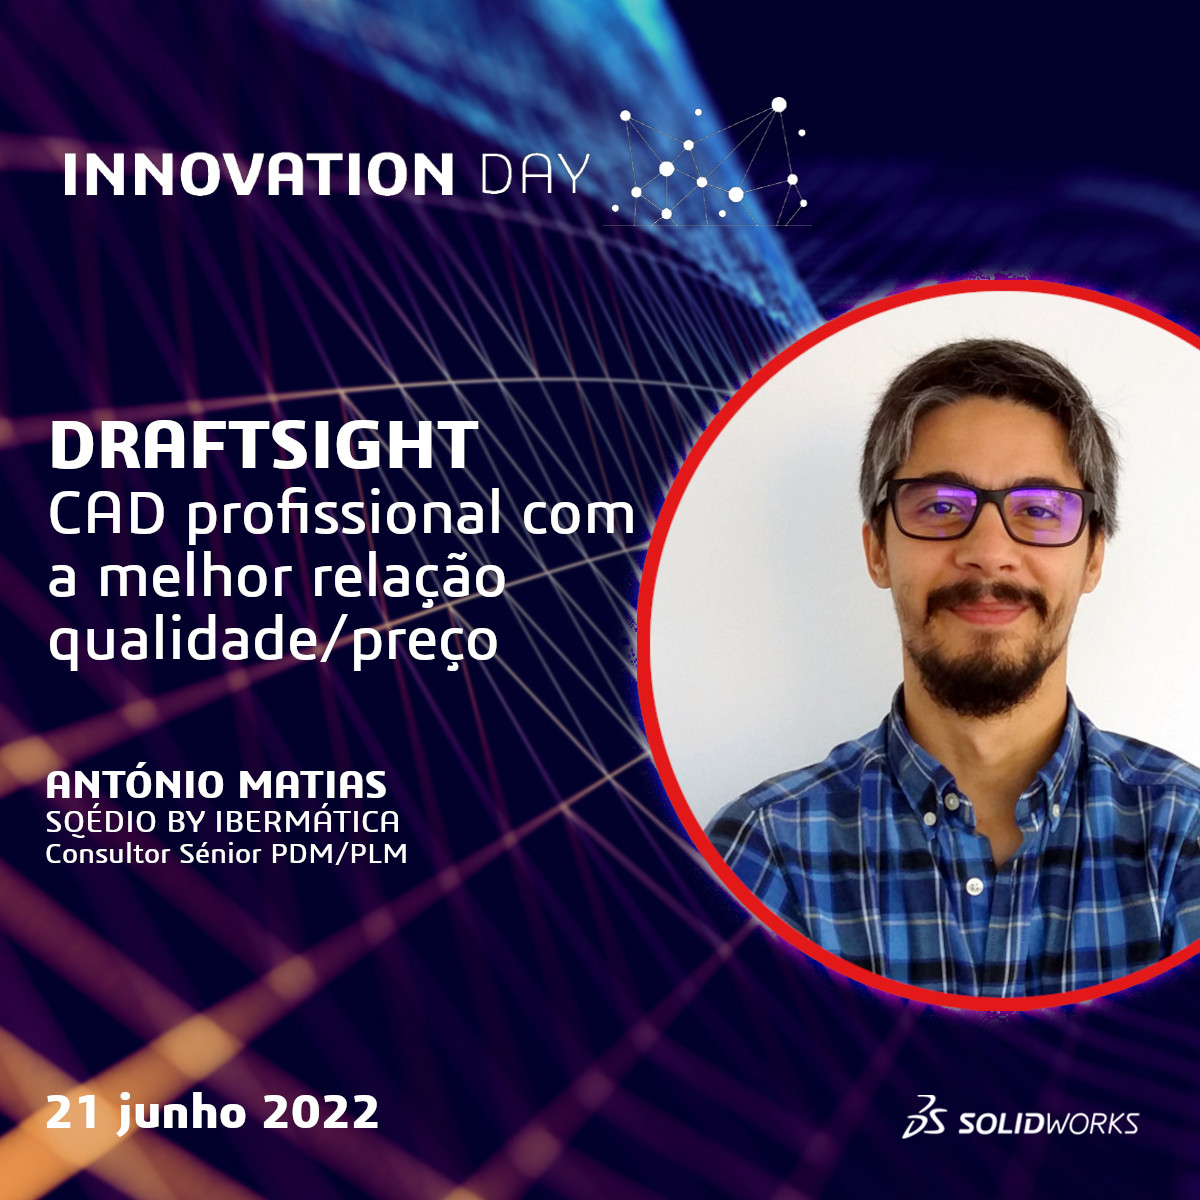 Sqédio by Ibermática | innovation Day 2022 - DraftSight